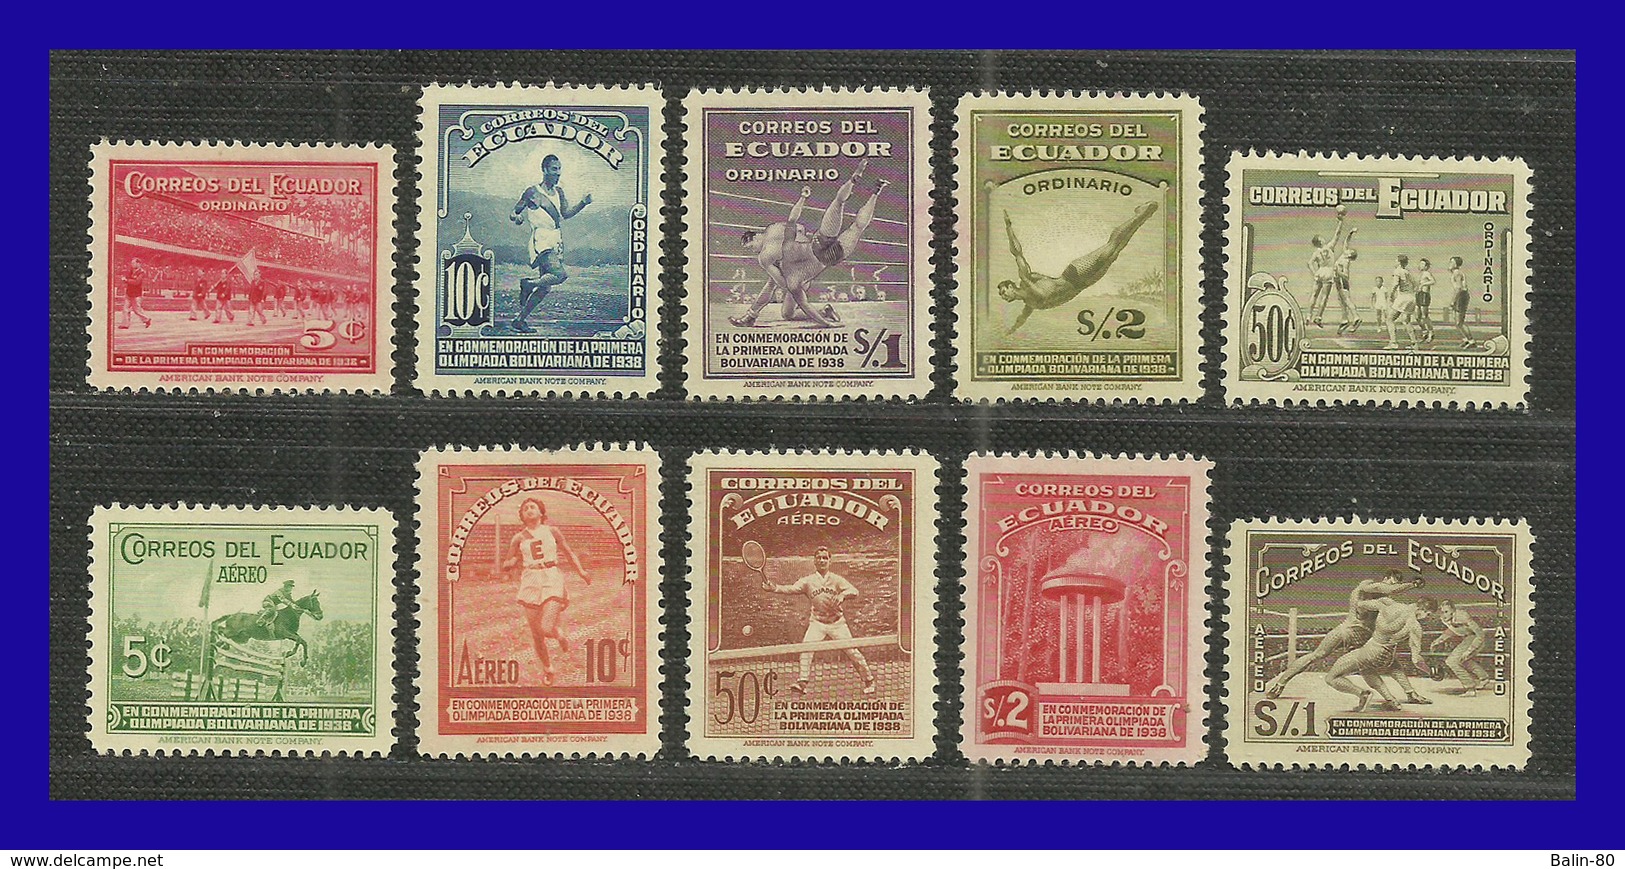 1939 - Ecuador - Sc. 377 - 371 + C 65 - C 69 - MNH - EC- 012 - 03 - Magnifica Serie Completa - Ecuador